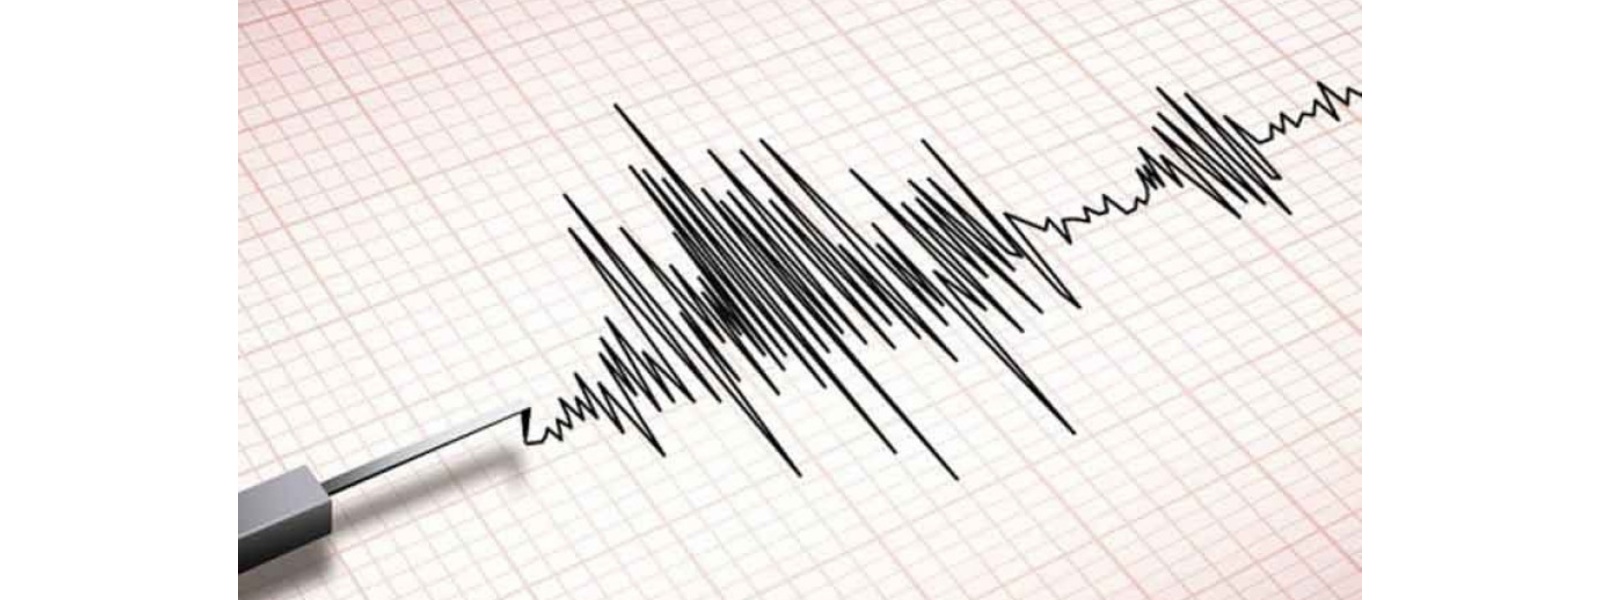 5.1 magnitude Tremor in Bay of Bengal, north of Jaffna Peninsula